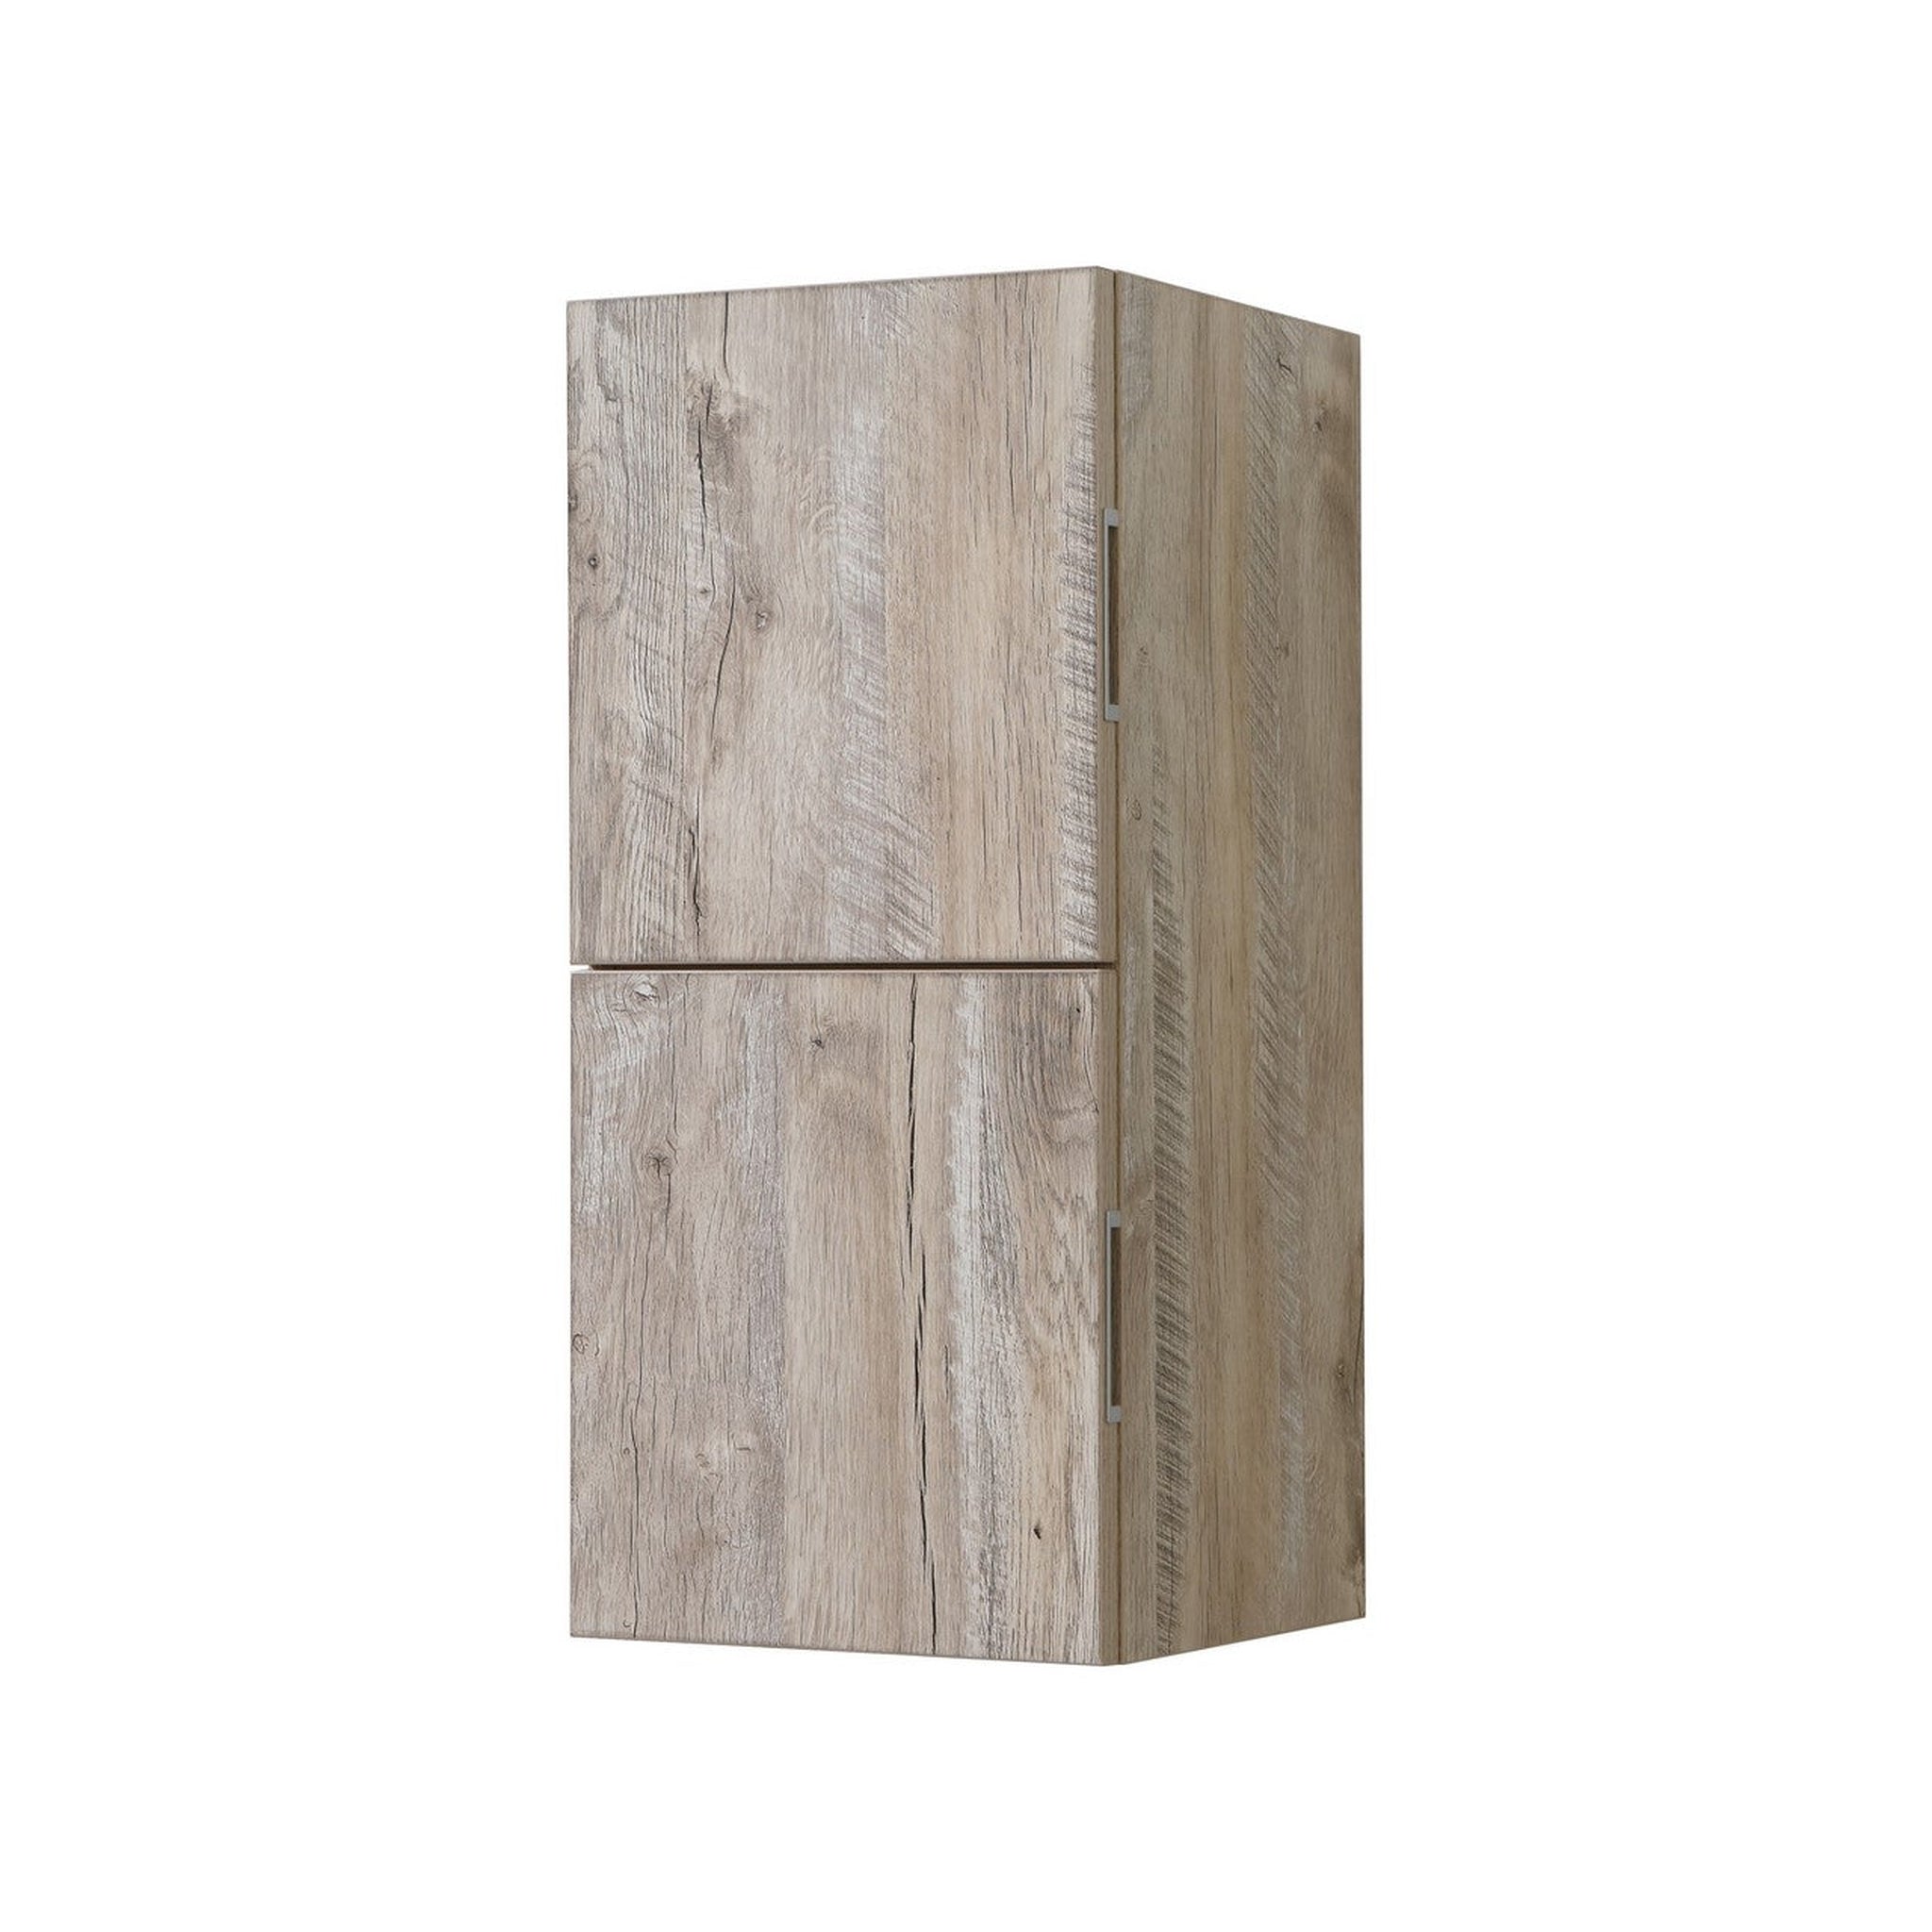 KubeBath, KubeBath Bliss 12"x 28" Nature Wood Linen Side Cabinet With Two Storage areas